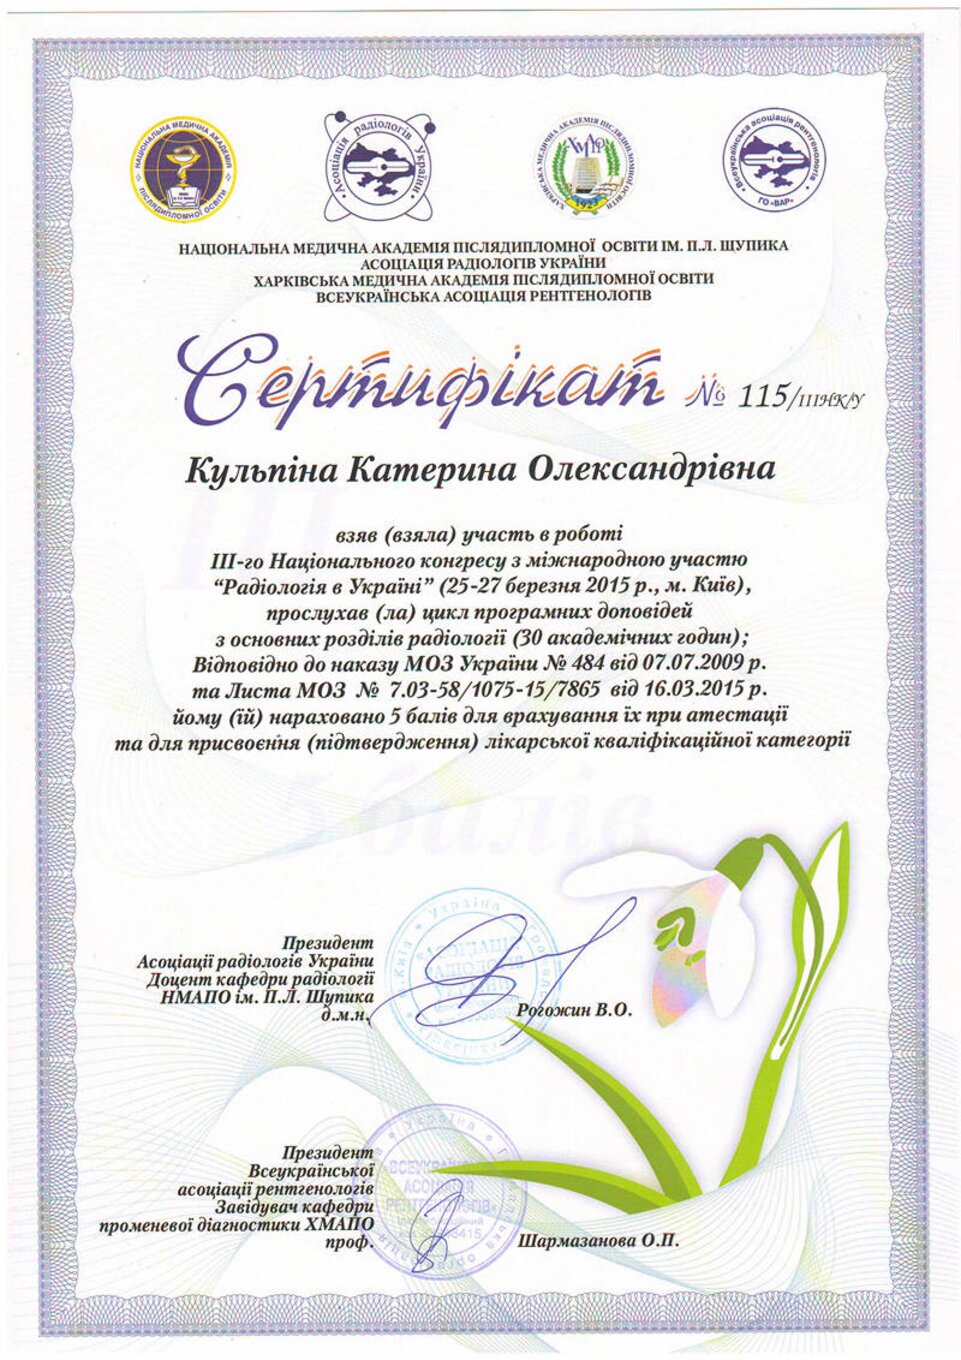 certificates/kulpina-katerina-oleksandrivna/hemomedika-cert-kulpina-scan10003.jpg